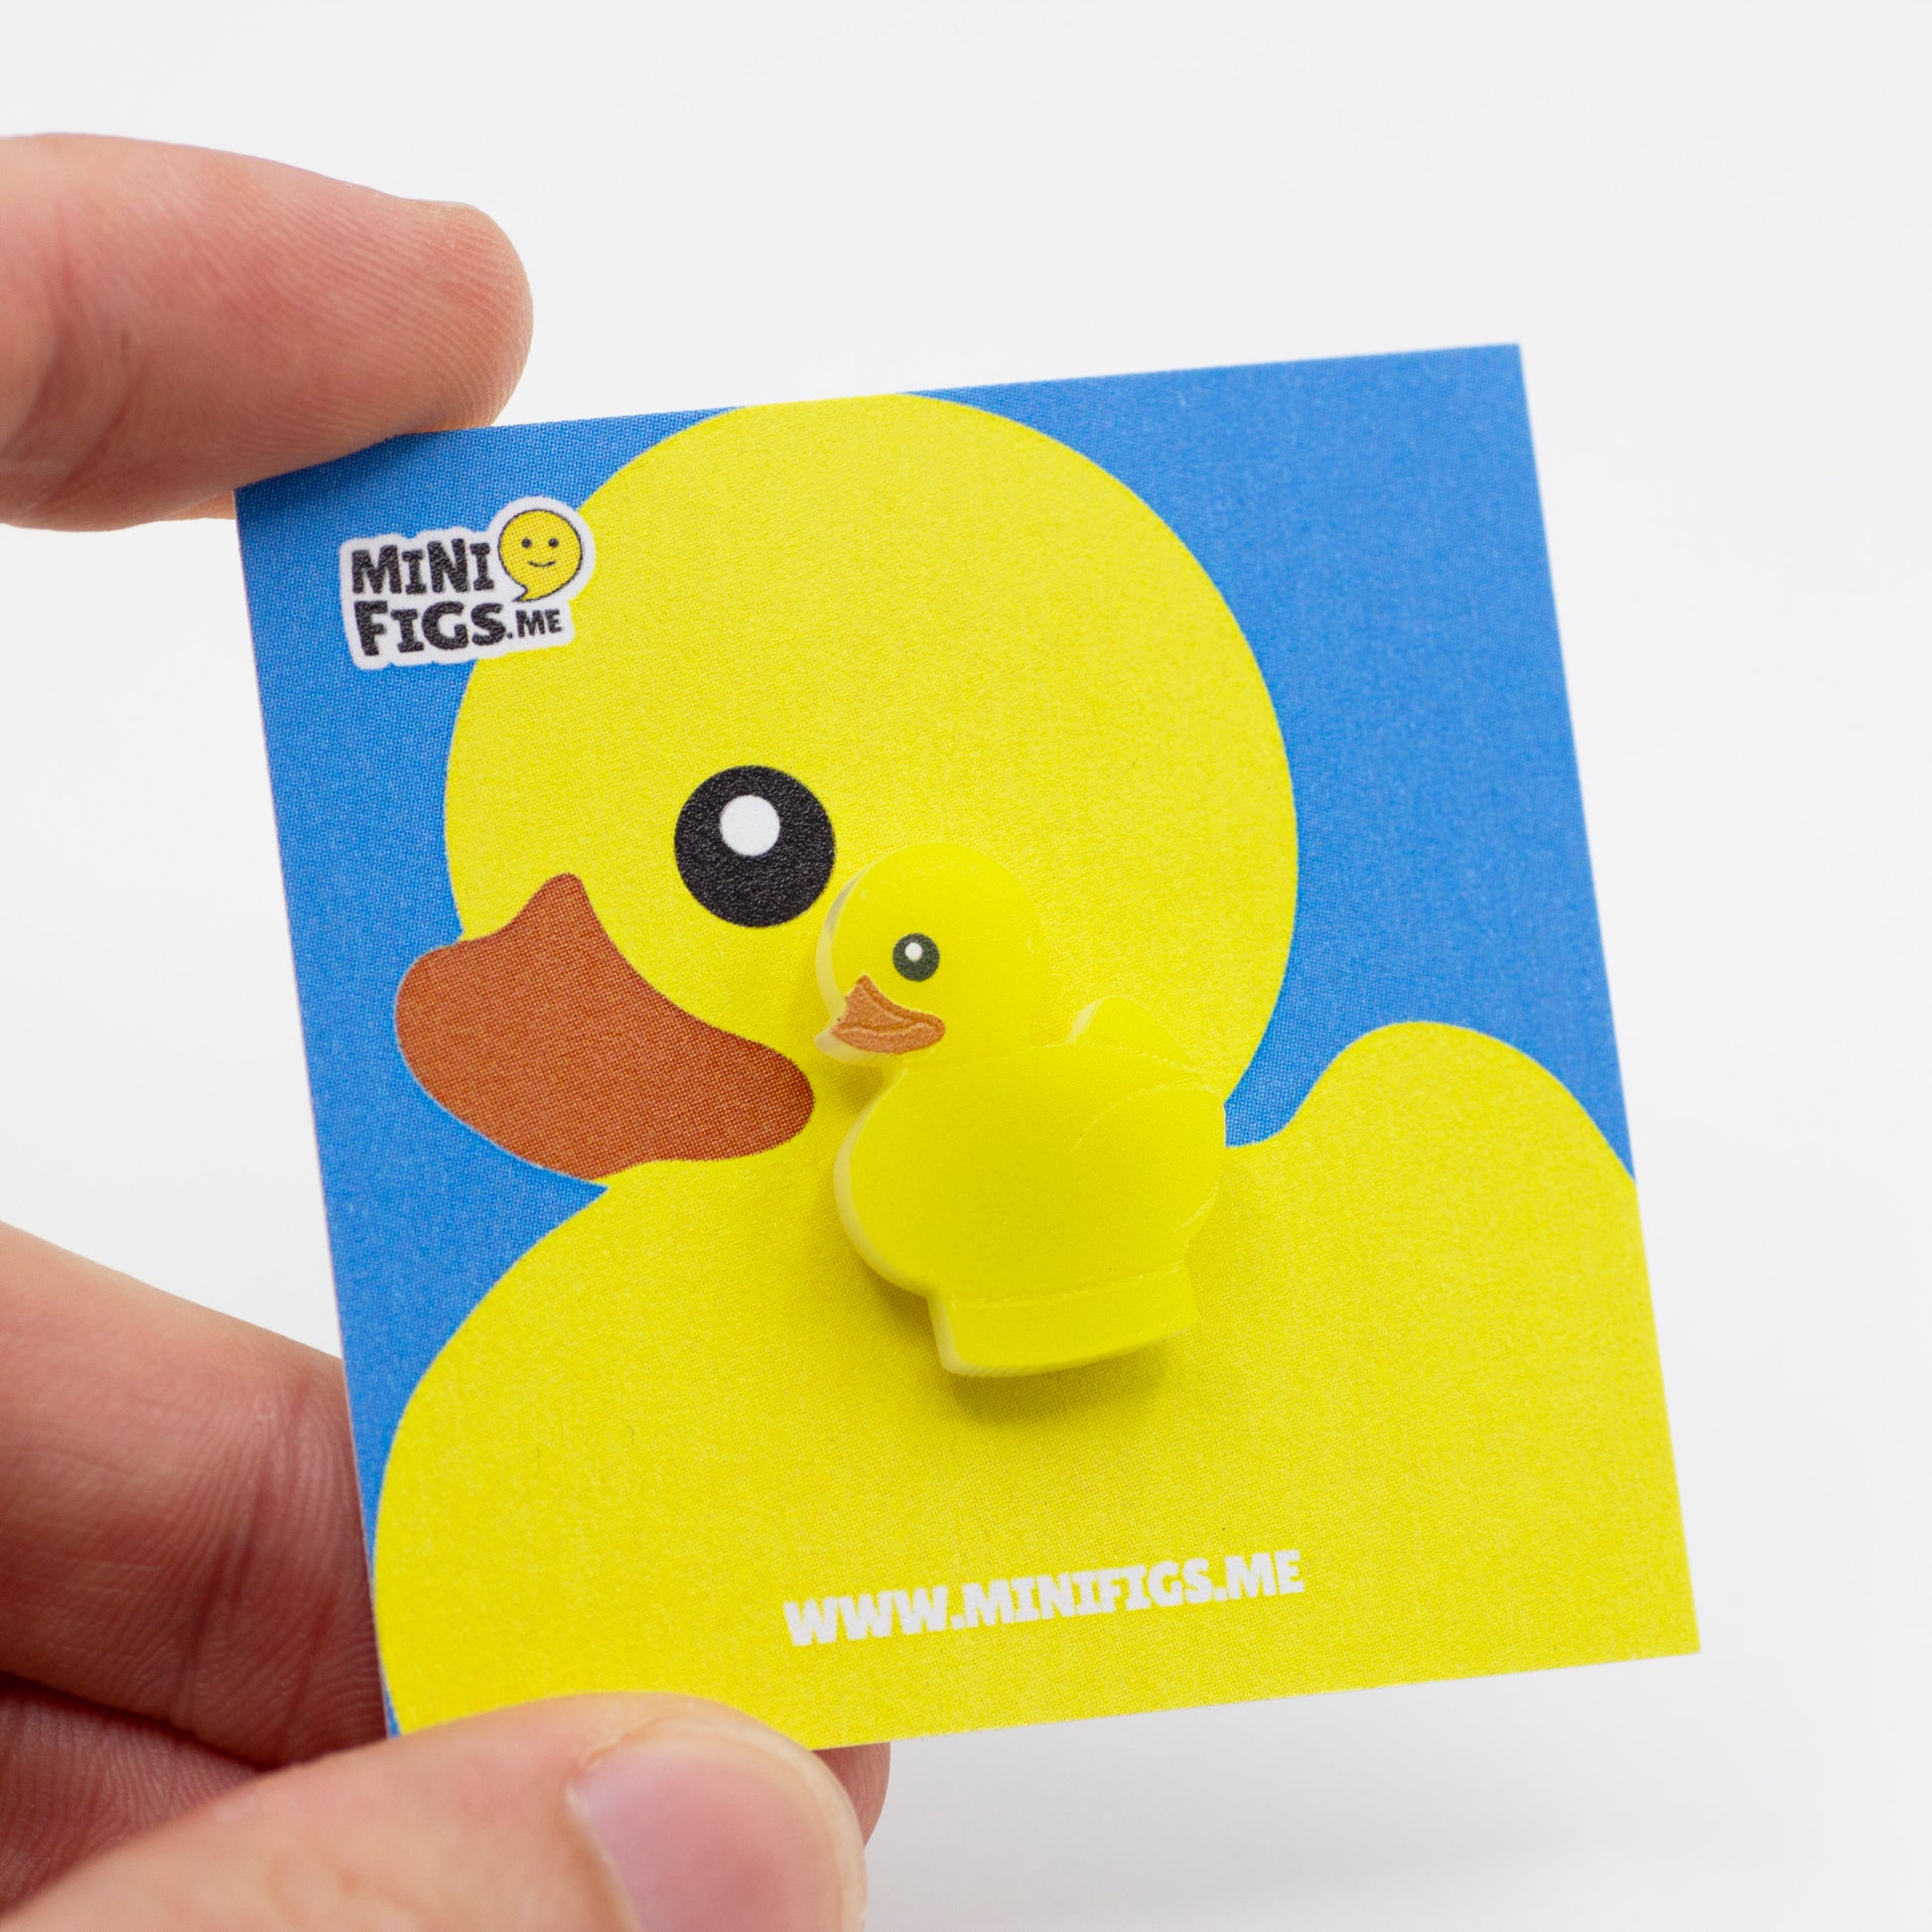 LEGO Duck Pin Badge - Acrylic Pin Badge Accessory